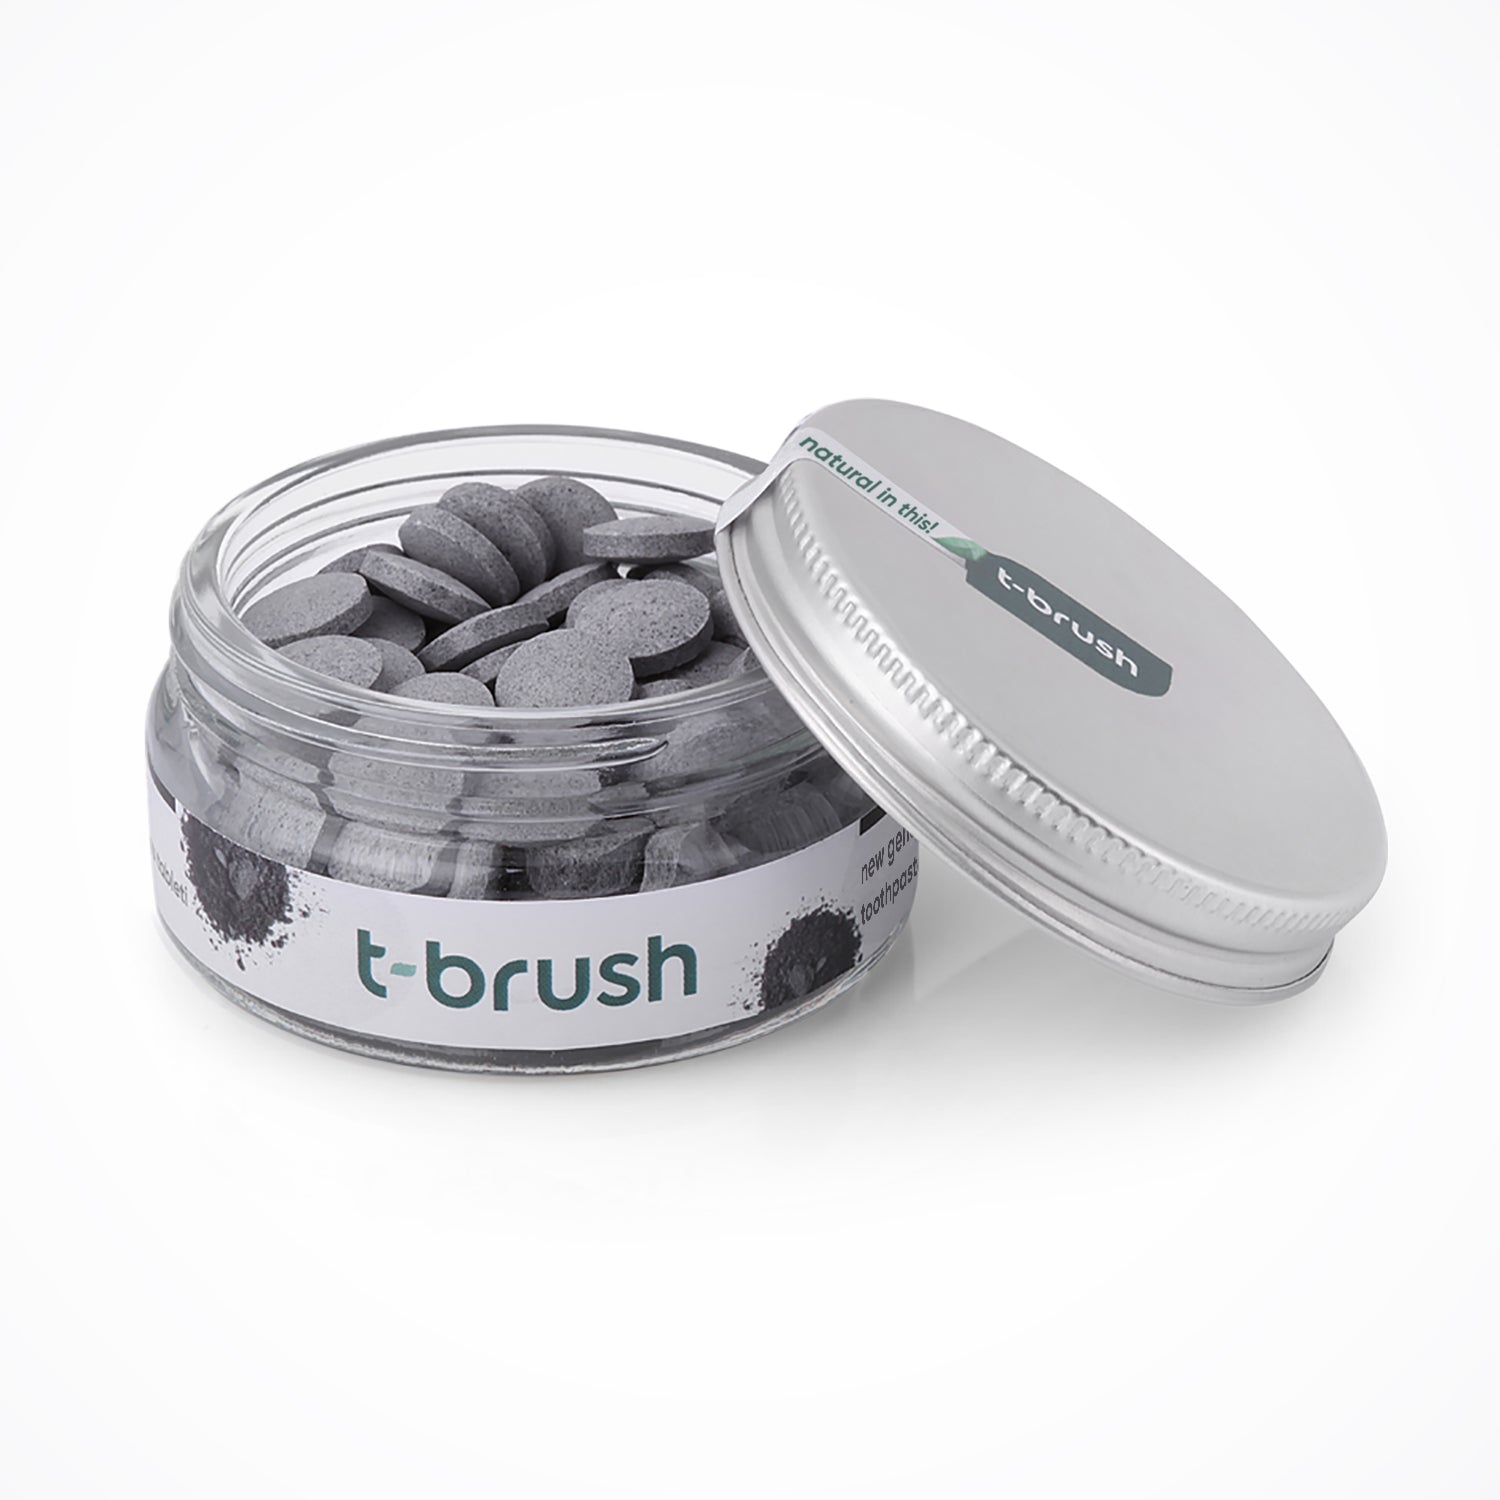 T-BRUSH - Premium Active Charcoal Oral Care Set (Nano Brush) - Attily - #boycott #فلسطين #palestine